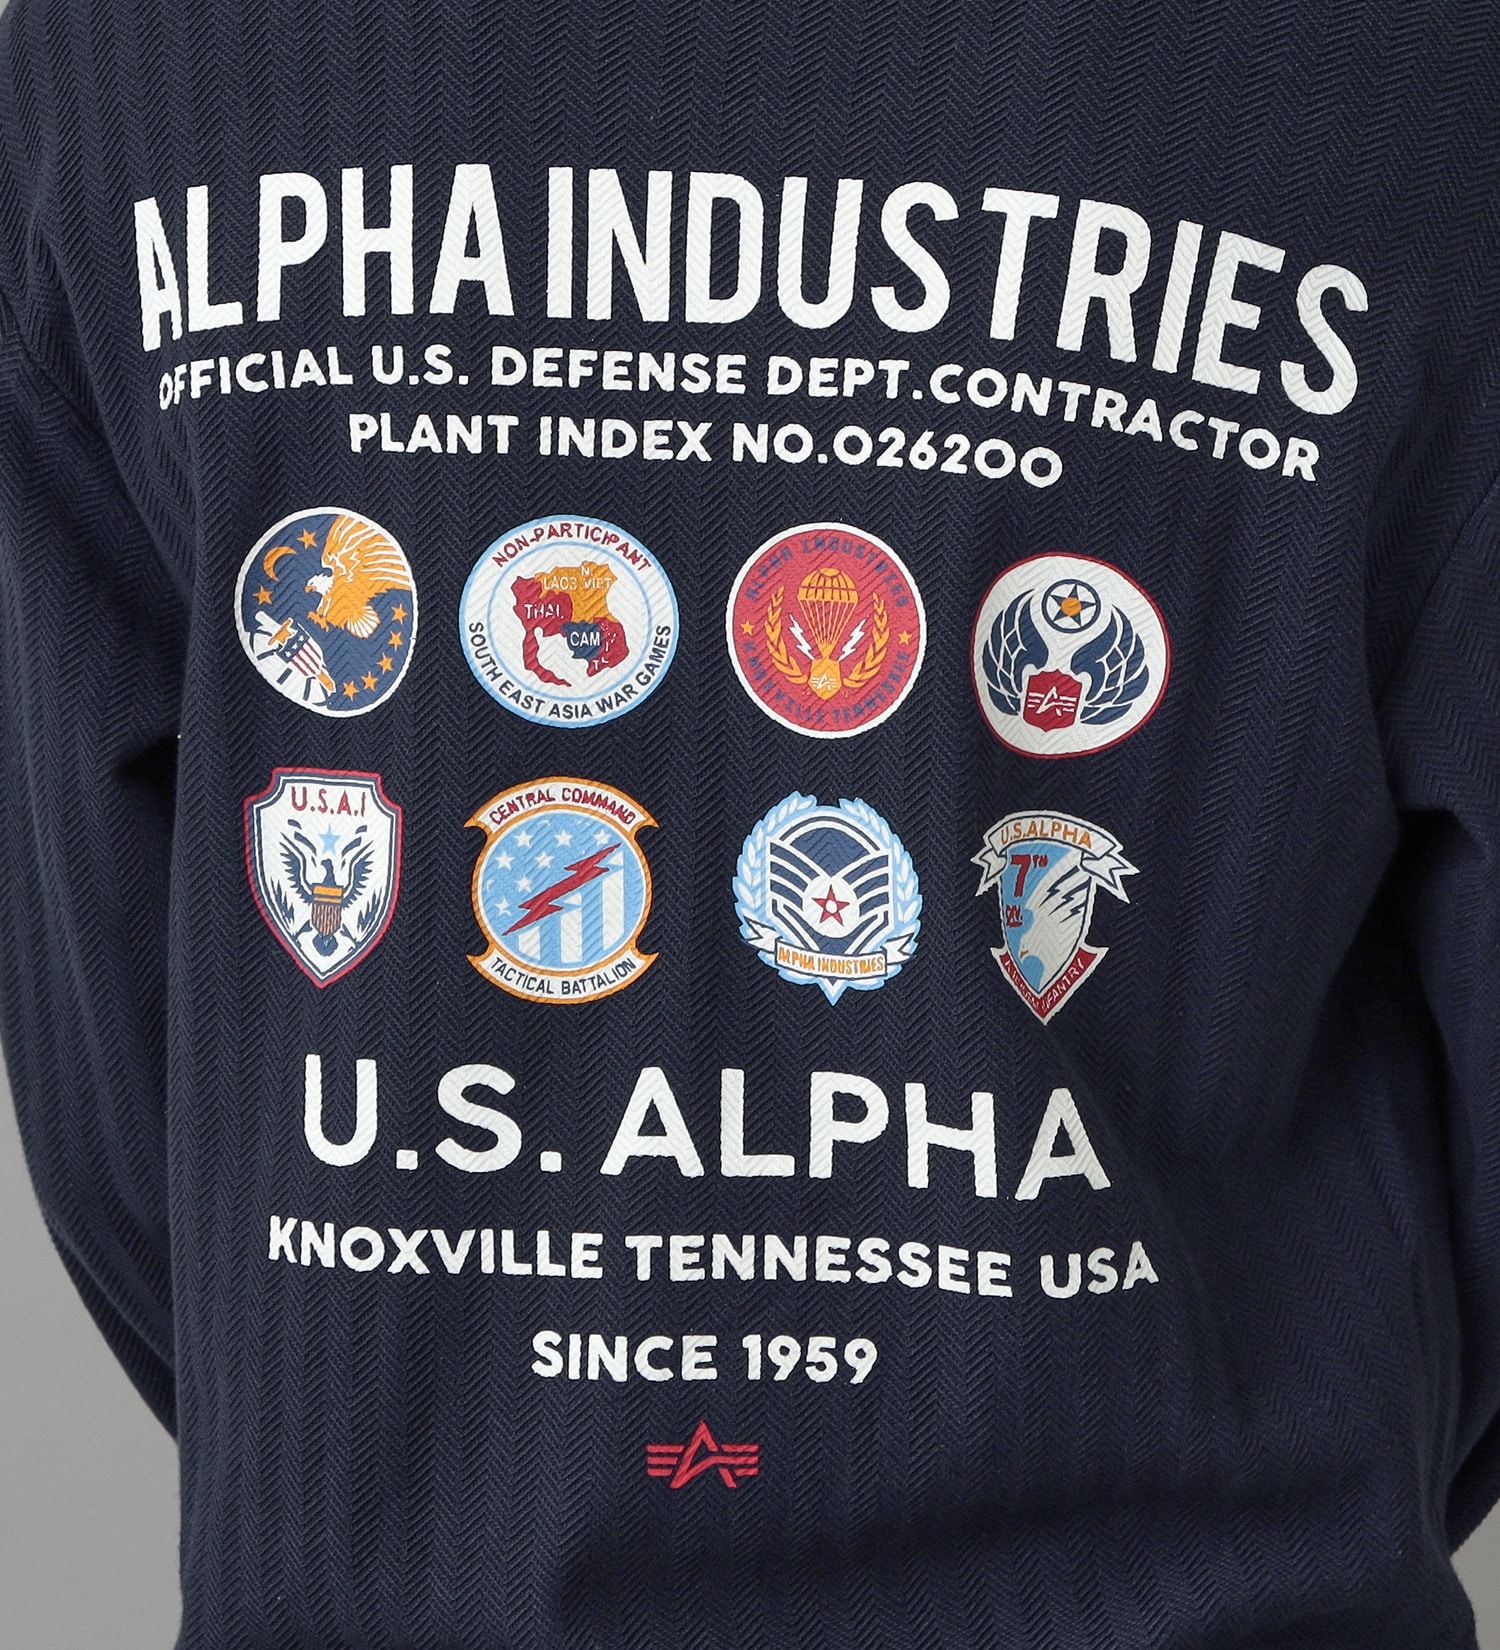 ALPHA(アルファ)のヘリンボーンバックプリント長袖Tシャツ|トップス/Tシャツ/カットソー/メンズ|ネイビー